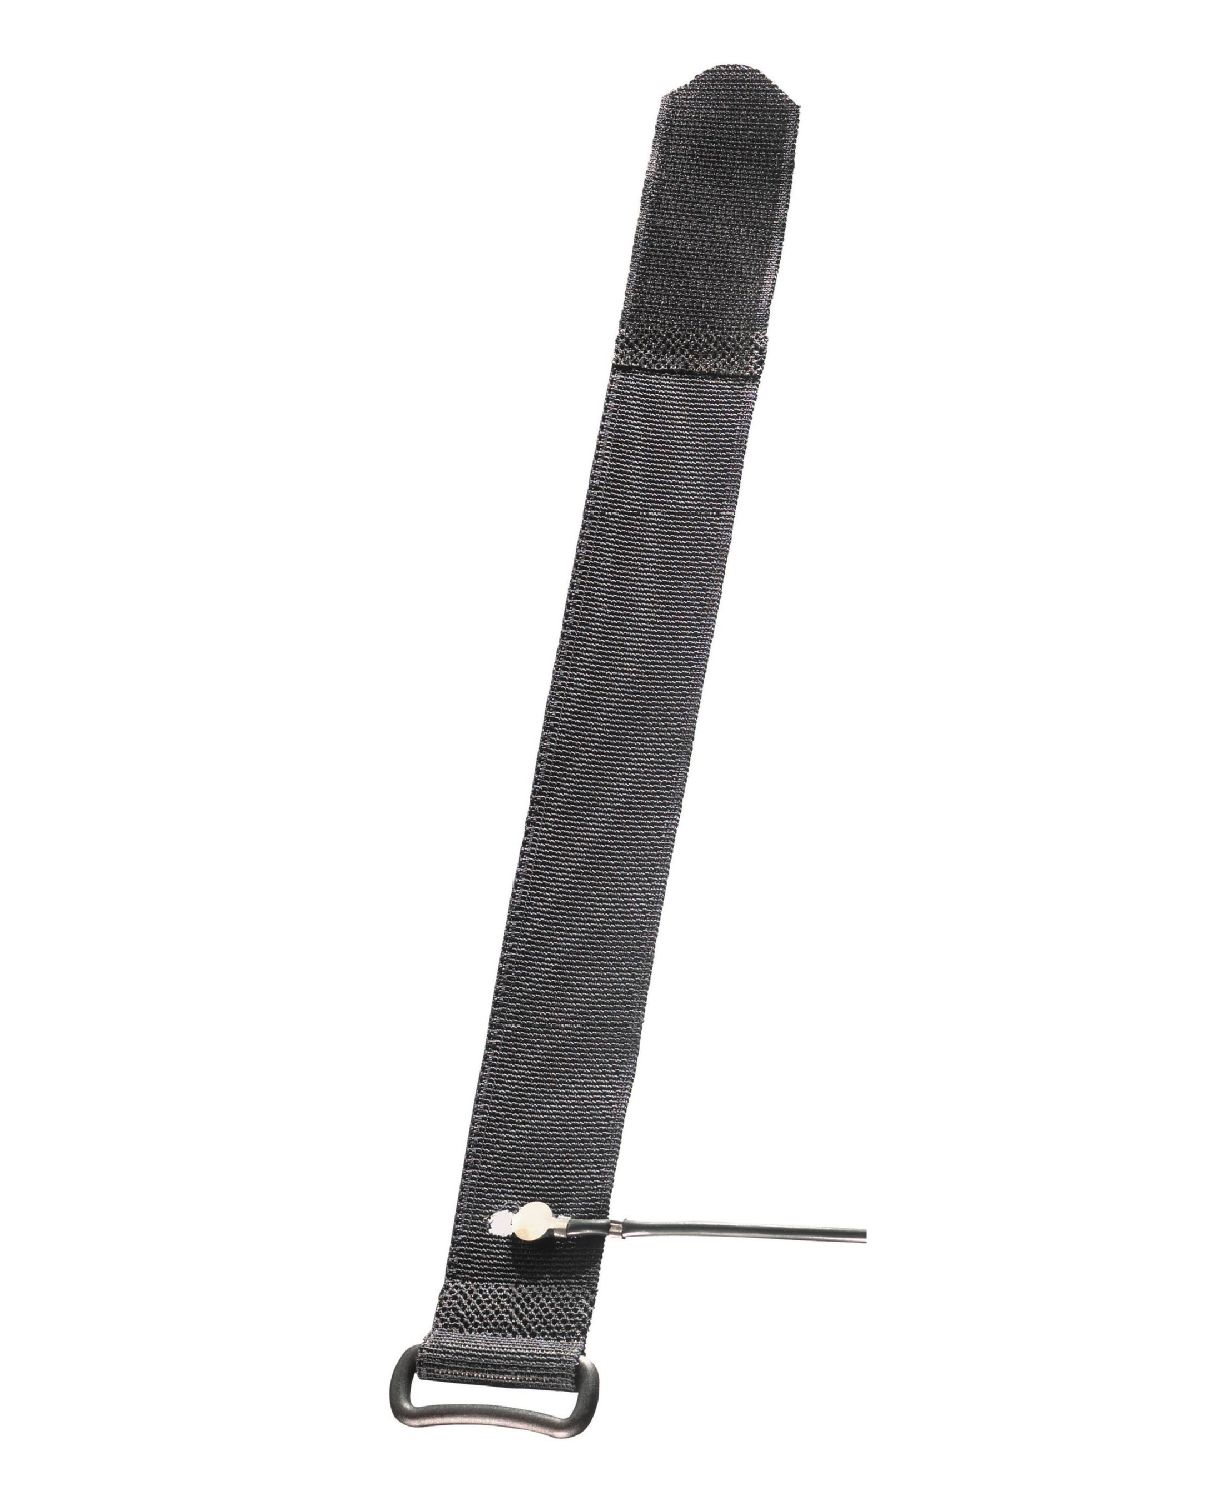 Зонд-обкрутка для труб диаметром до 75 мм, с липучкой Velcro TESTO 0613 4611 Трубы для электропроводки